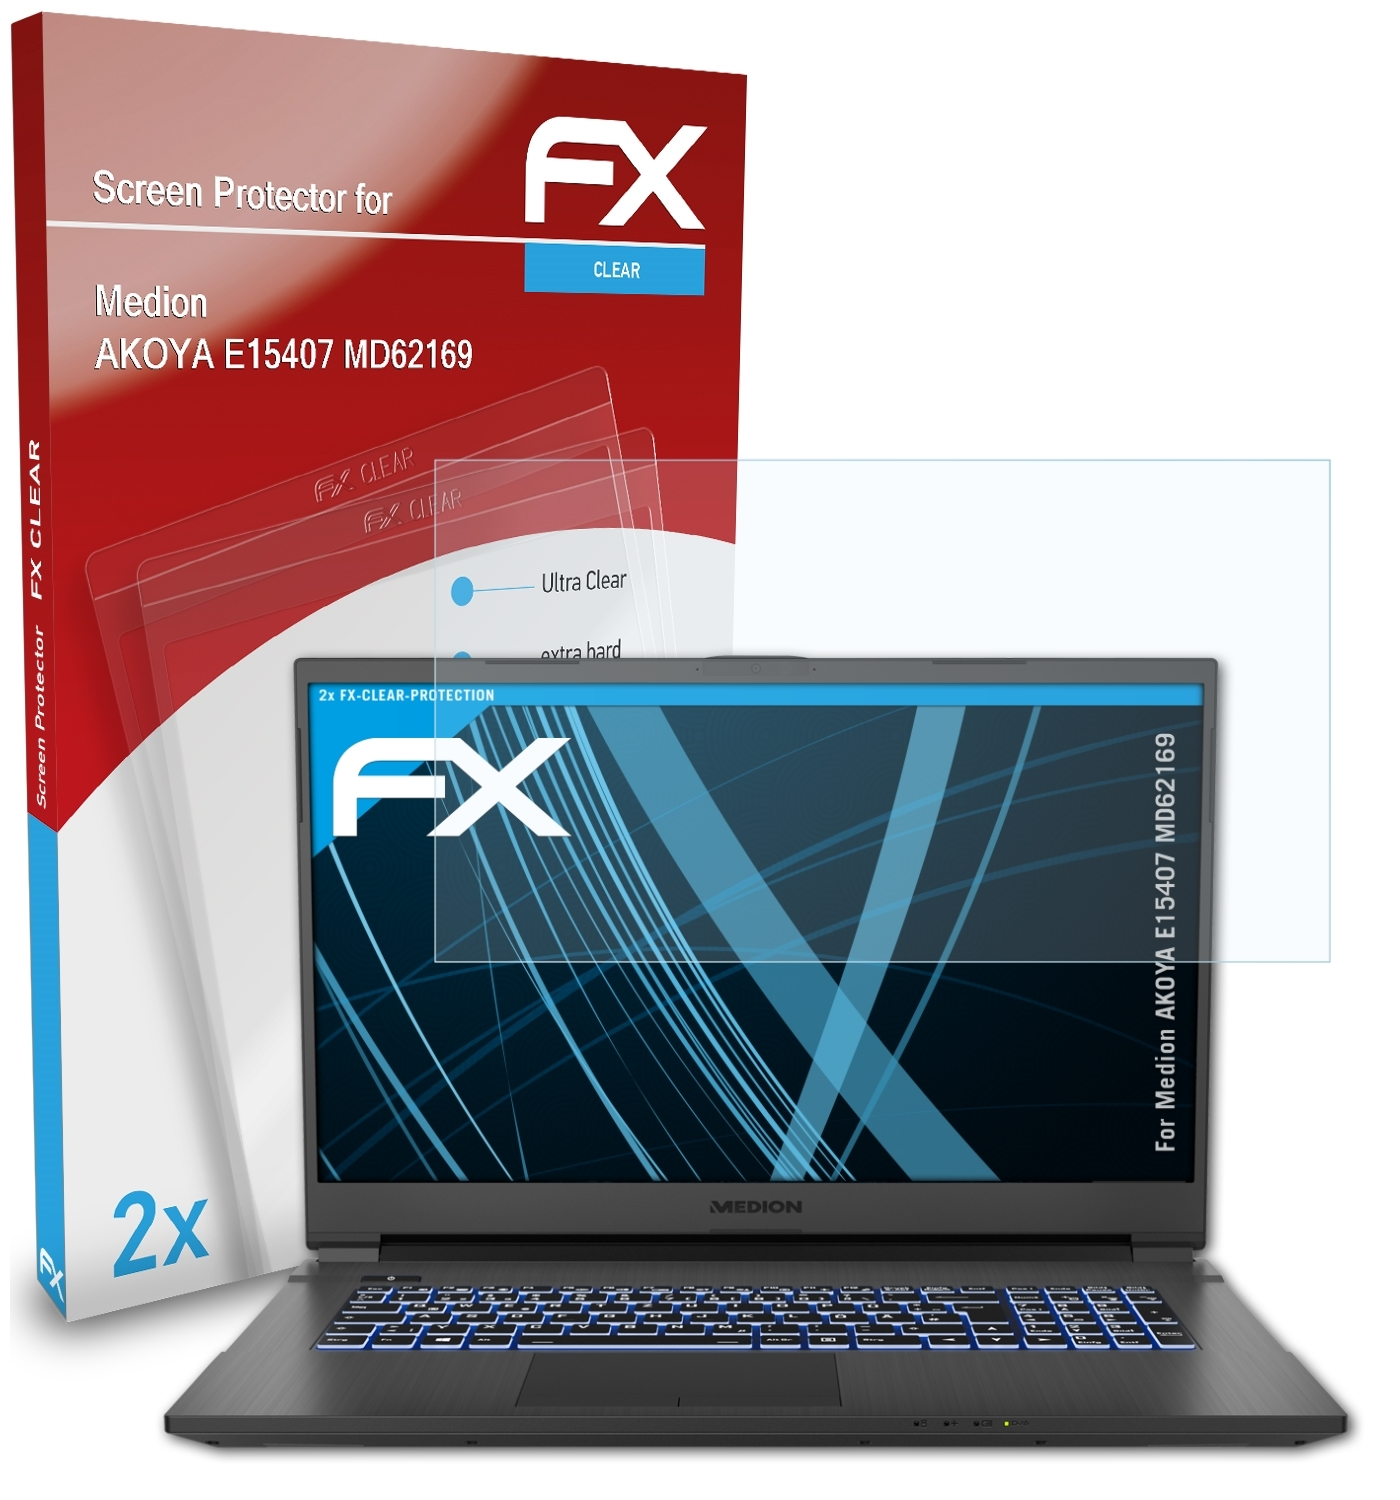 ATFOLIX Medion Displayschutz(für FX-Clear 2x (MD62169)) E15407 AKOYA